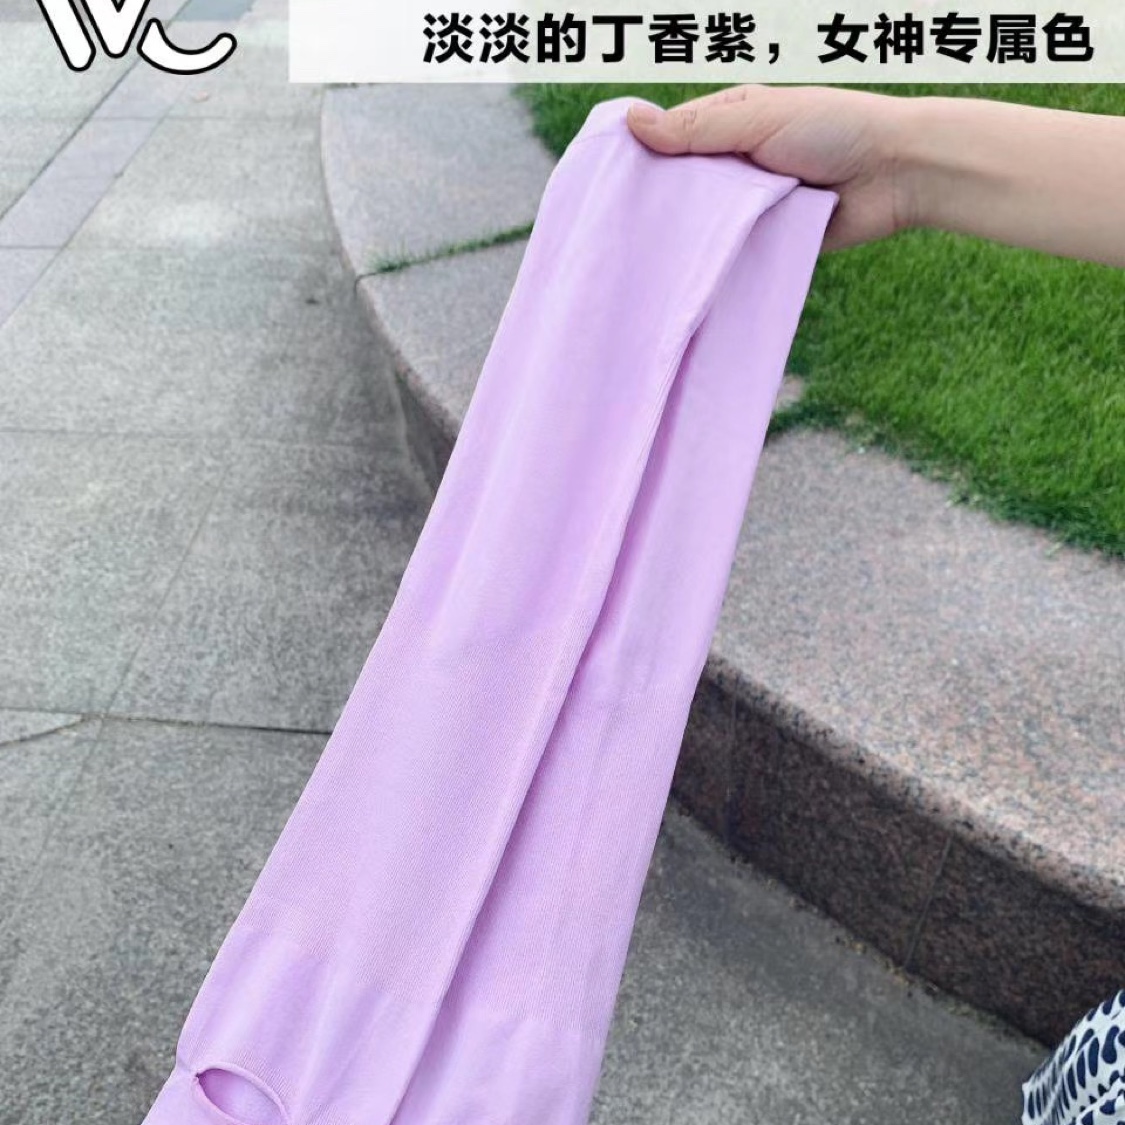 VVC防晒冰袖（经典款）丁香紫
UPF 200+ 紫外线阻隔率≥99%
淡淡的丁香紫女神专属色系~详情图2